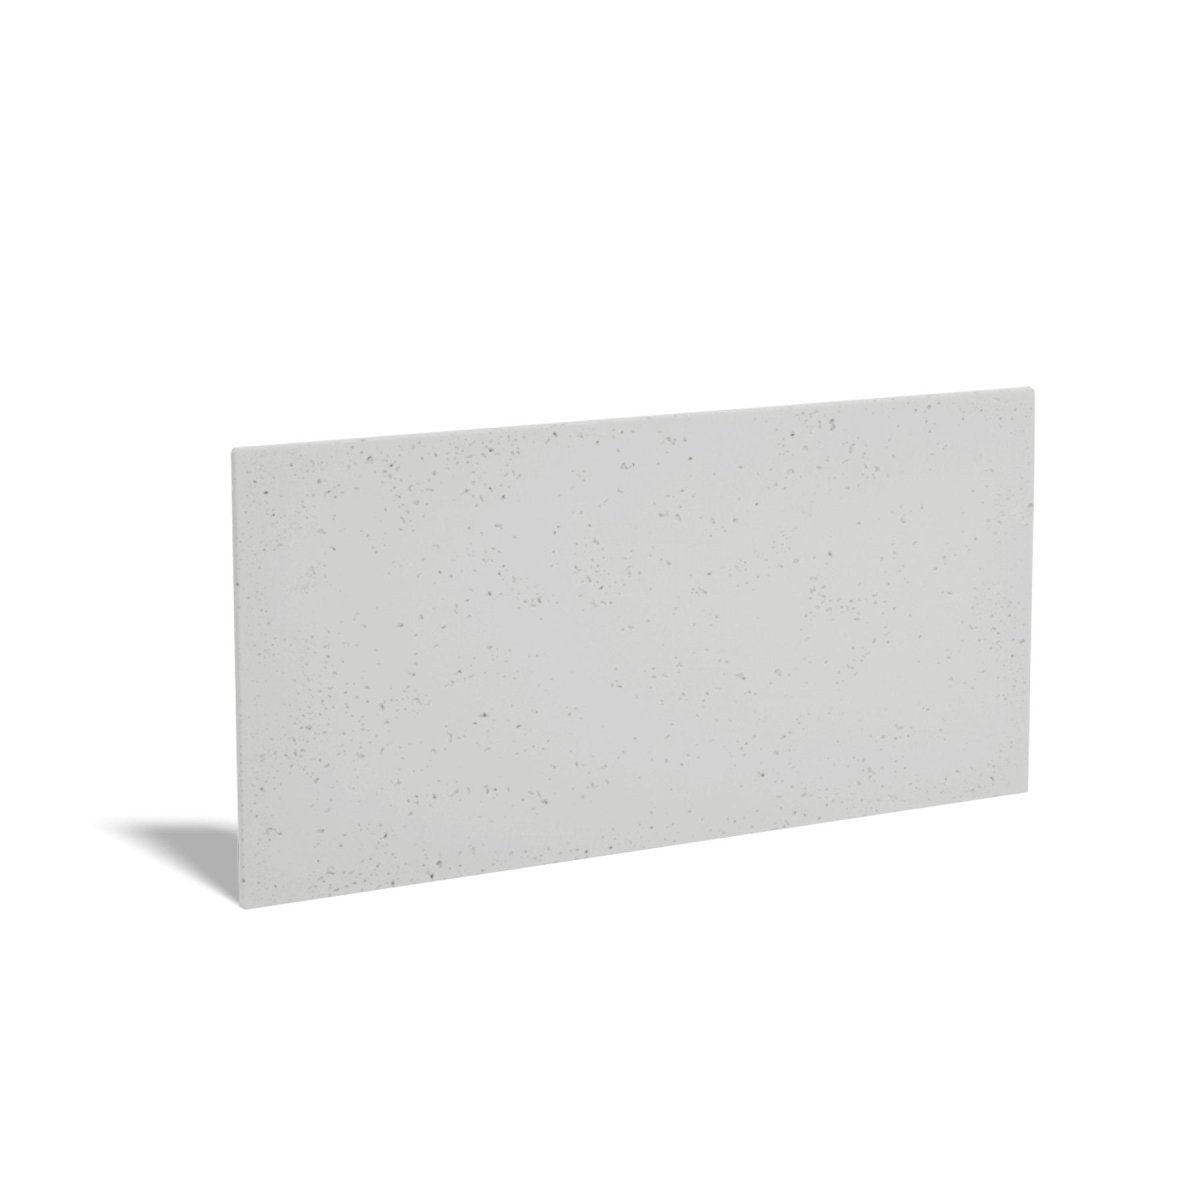 Concrete Wall Panel INTERIOR - 150 x 75 cm - DecorMania.eu